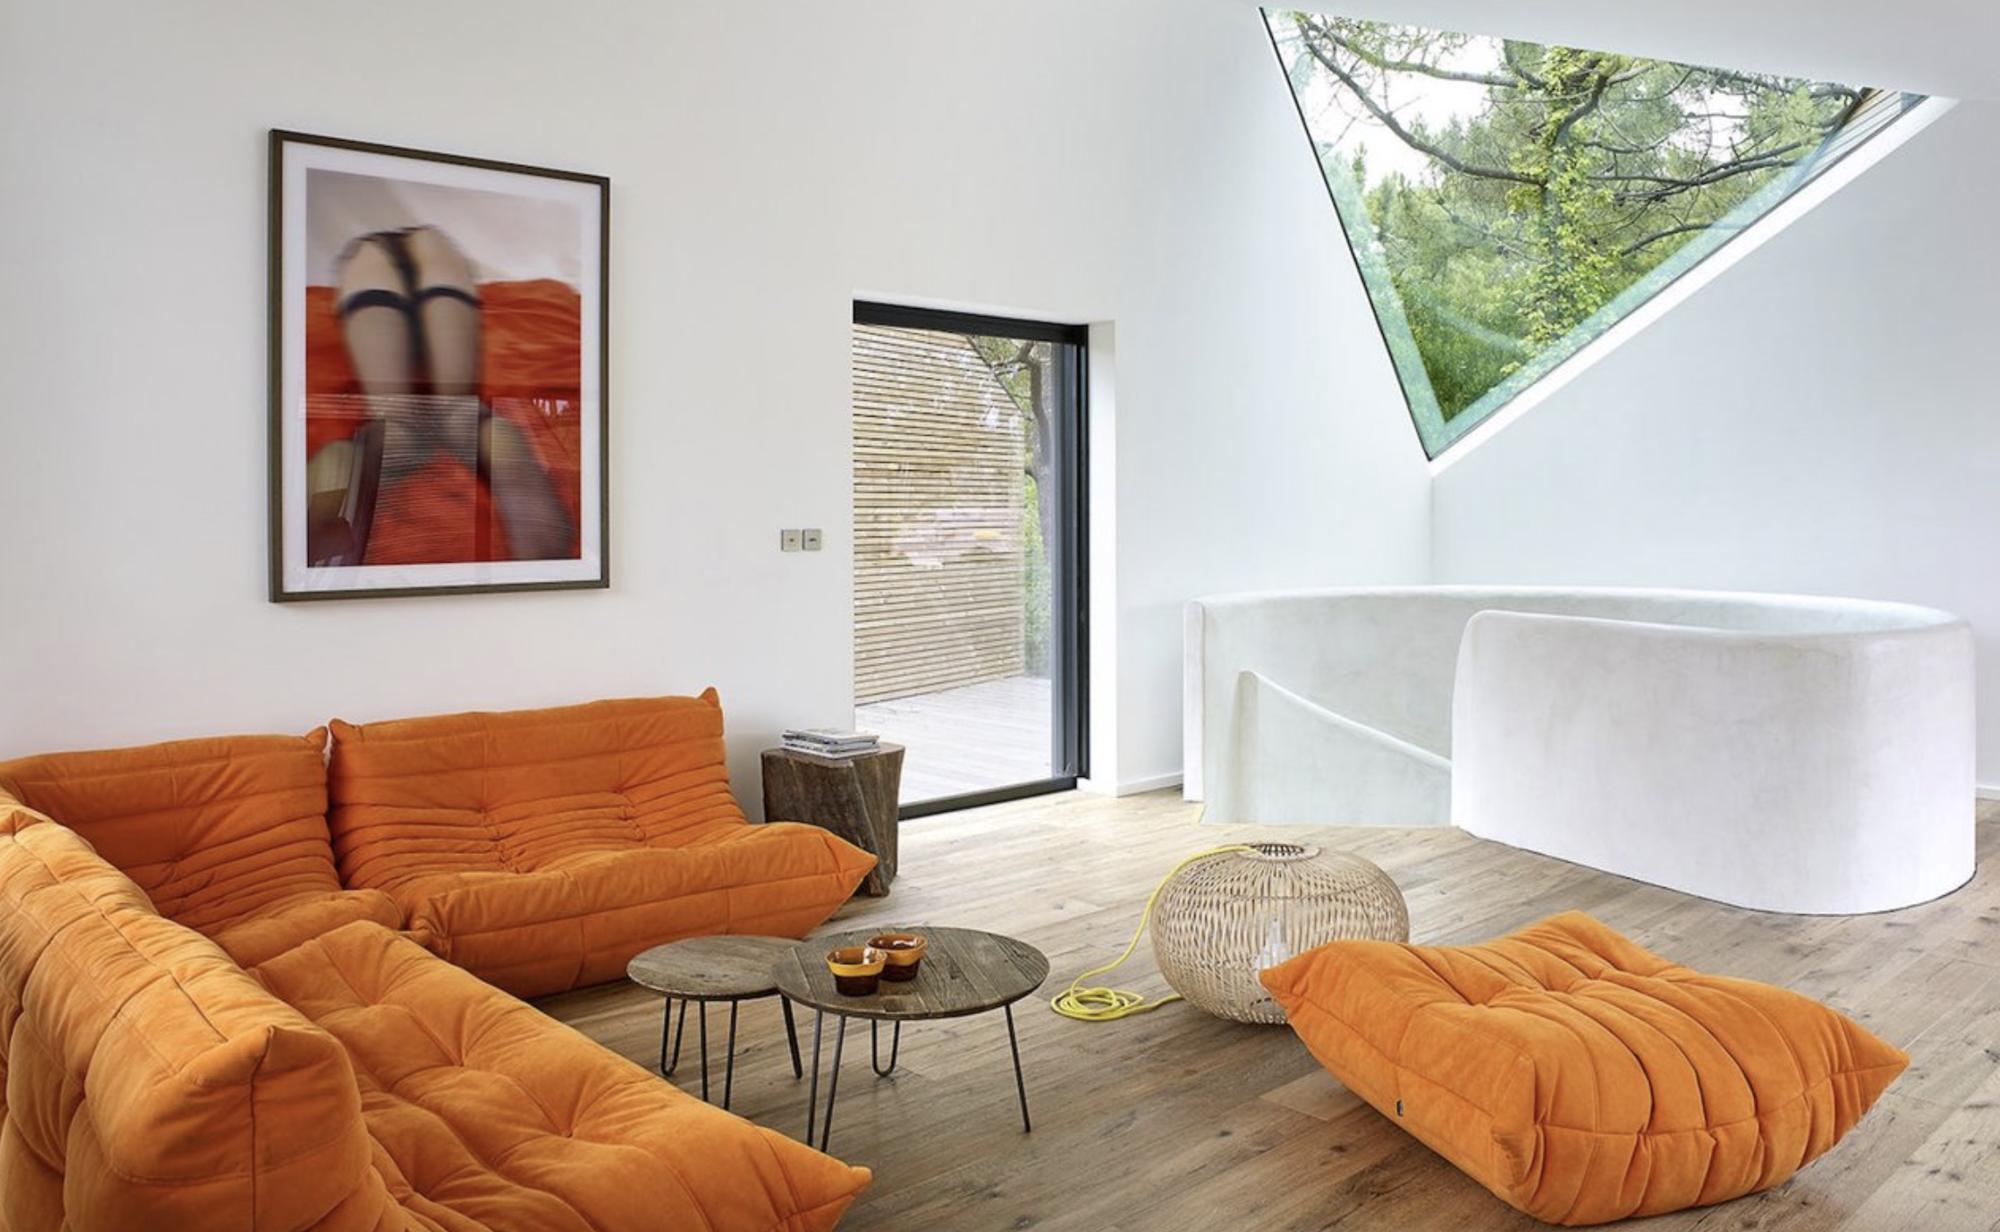 sofas naranjas y ventana triangular